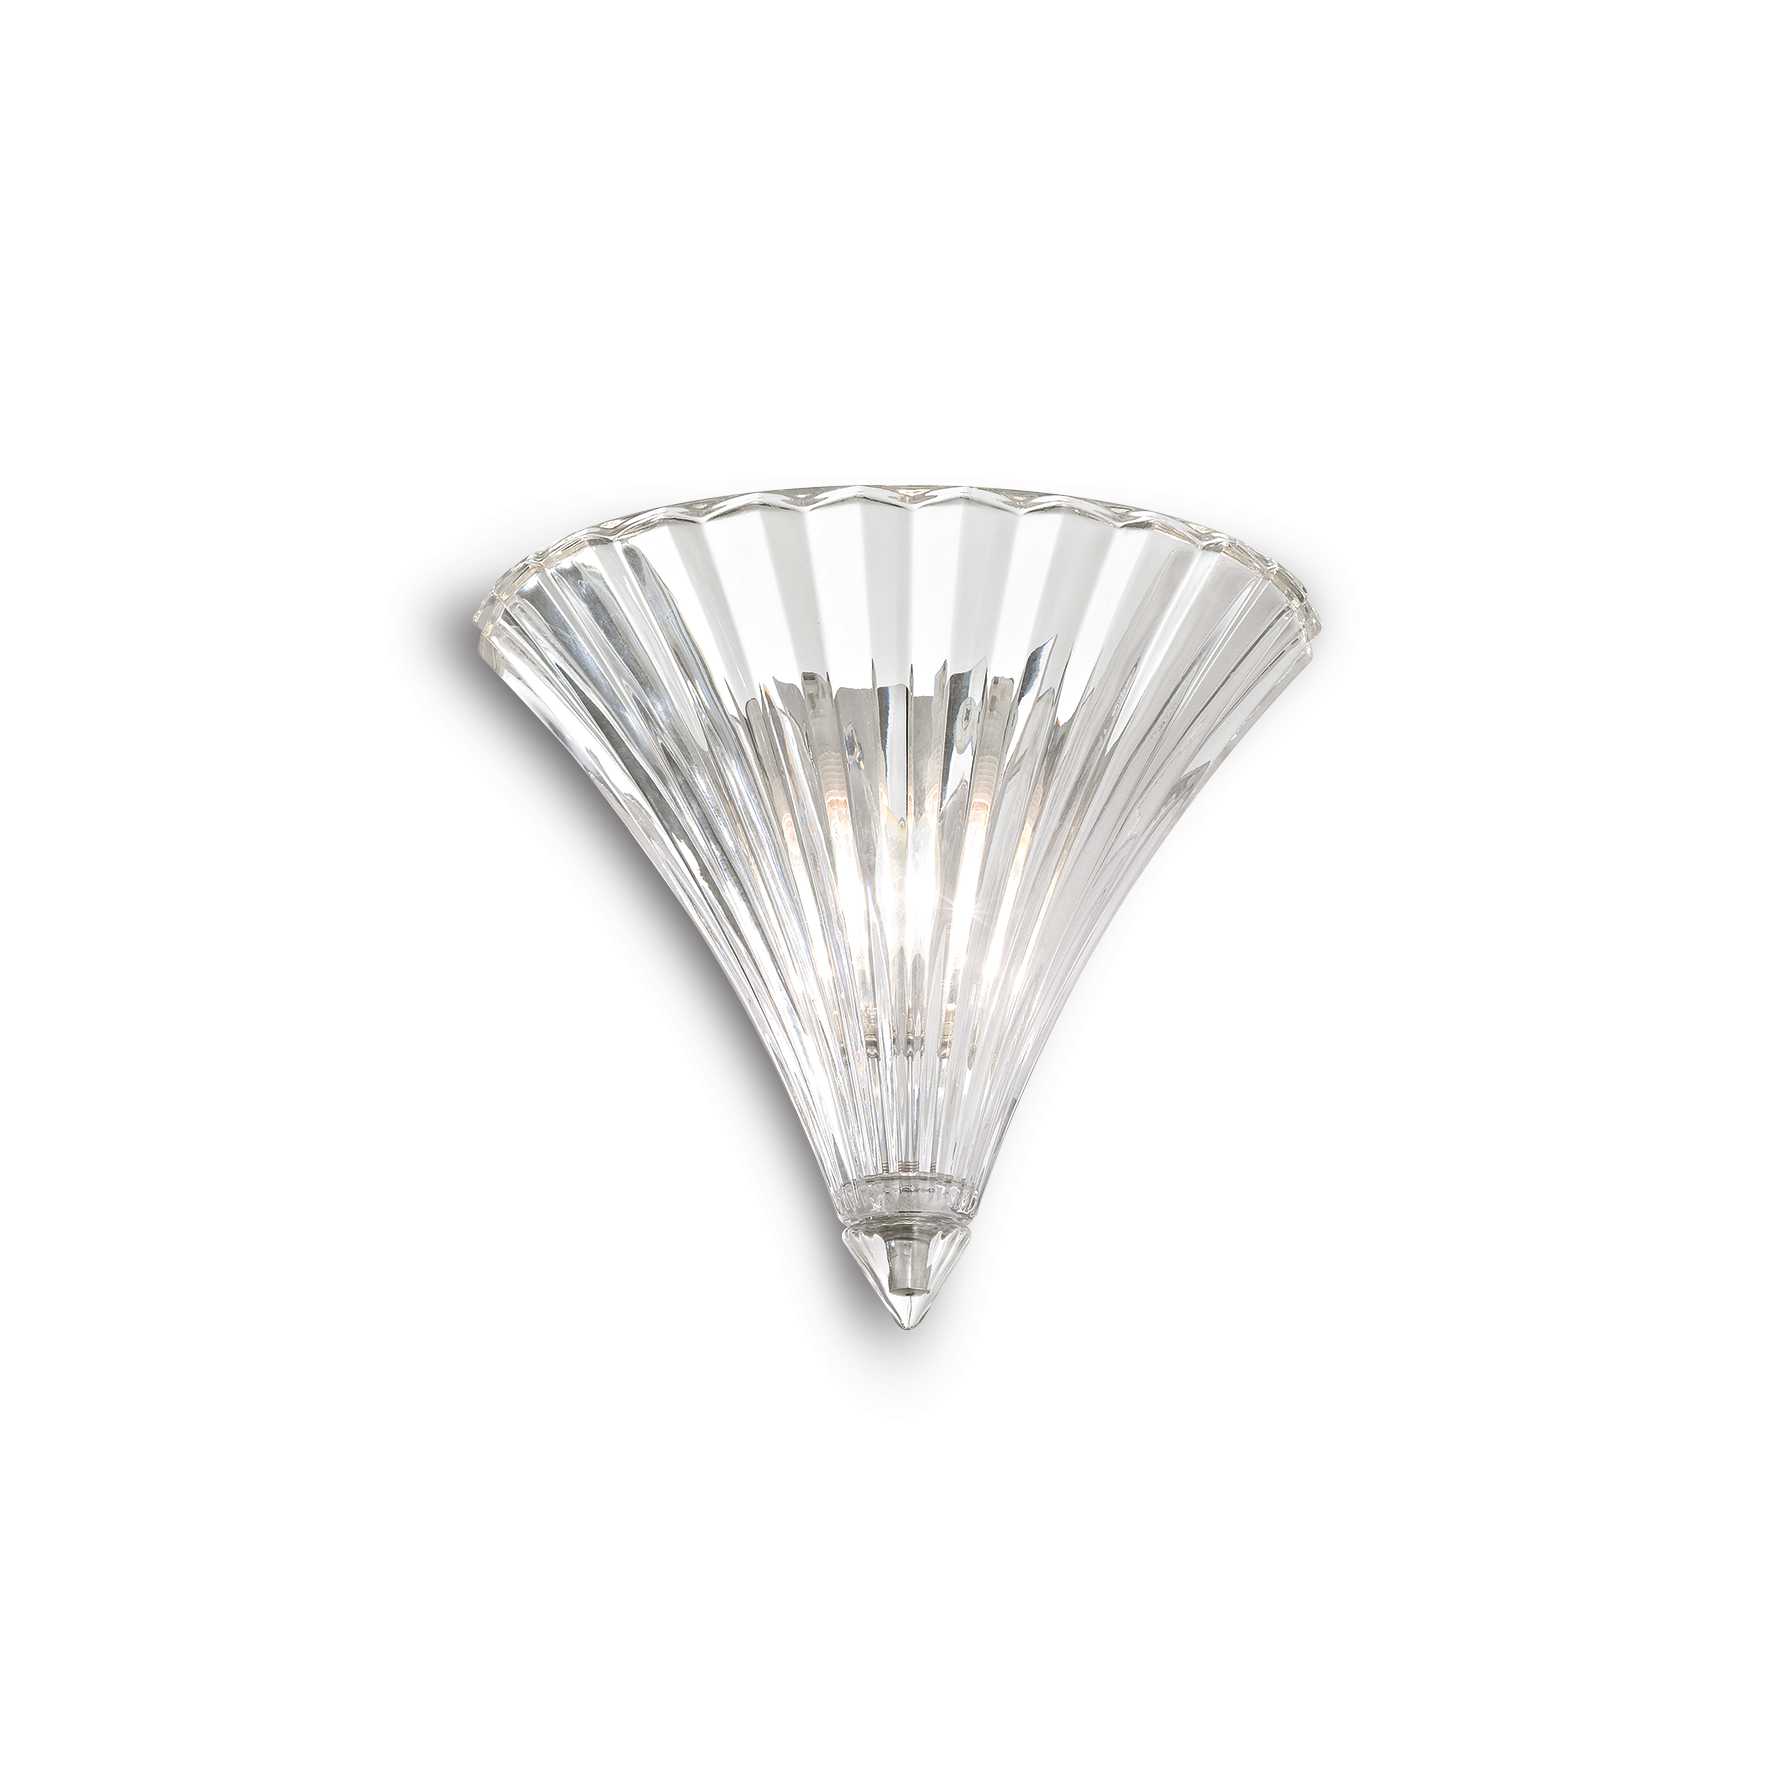 AD hotelska oprema Zidna lampa Santa ap1 (mala)- Prozirna slika proizvoda